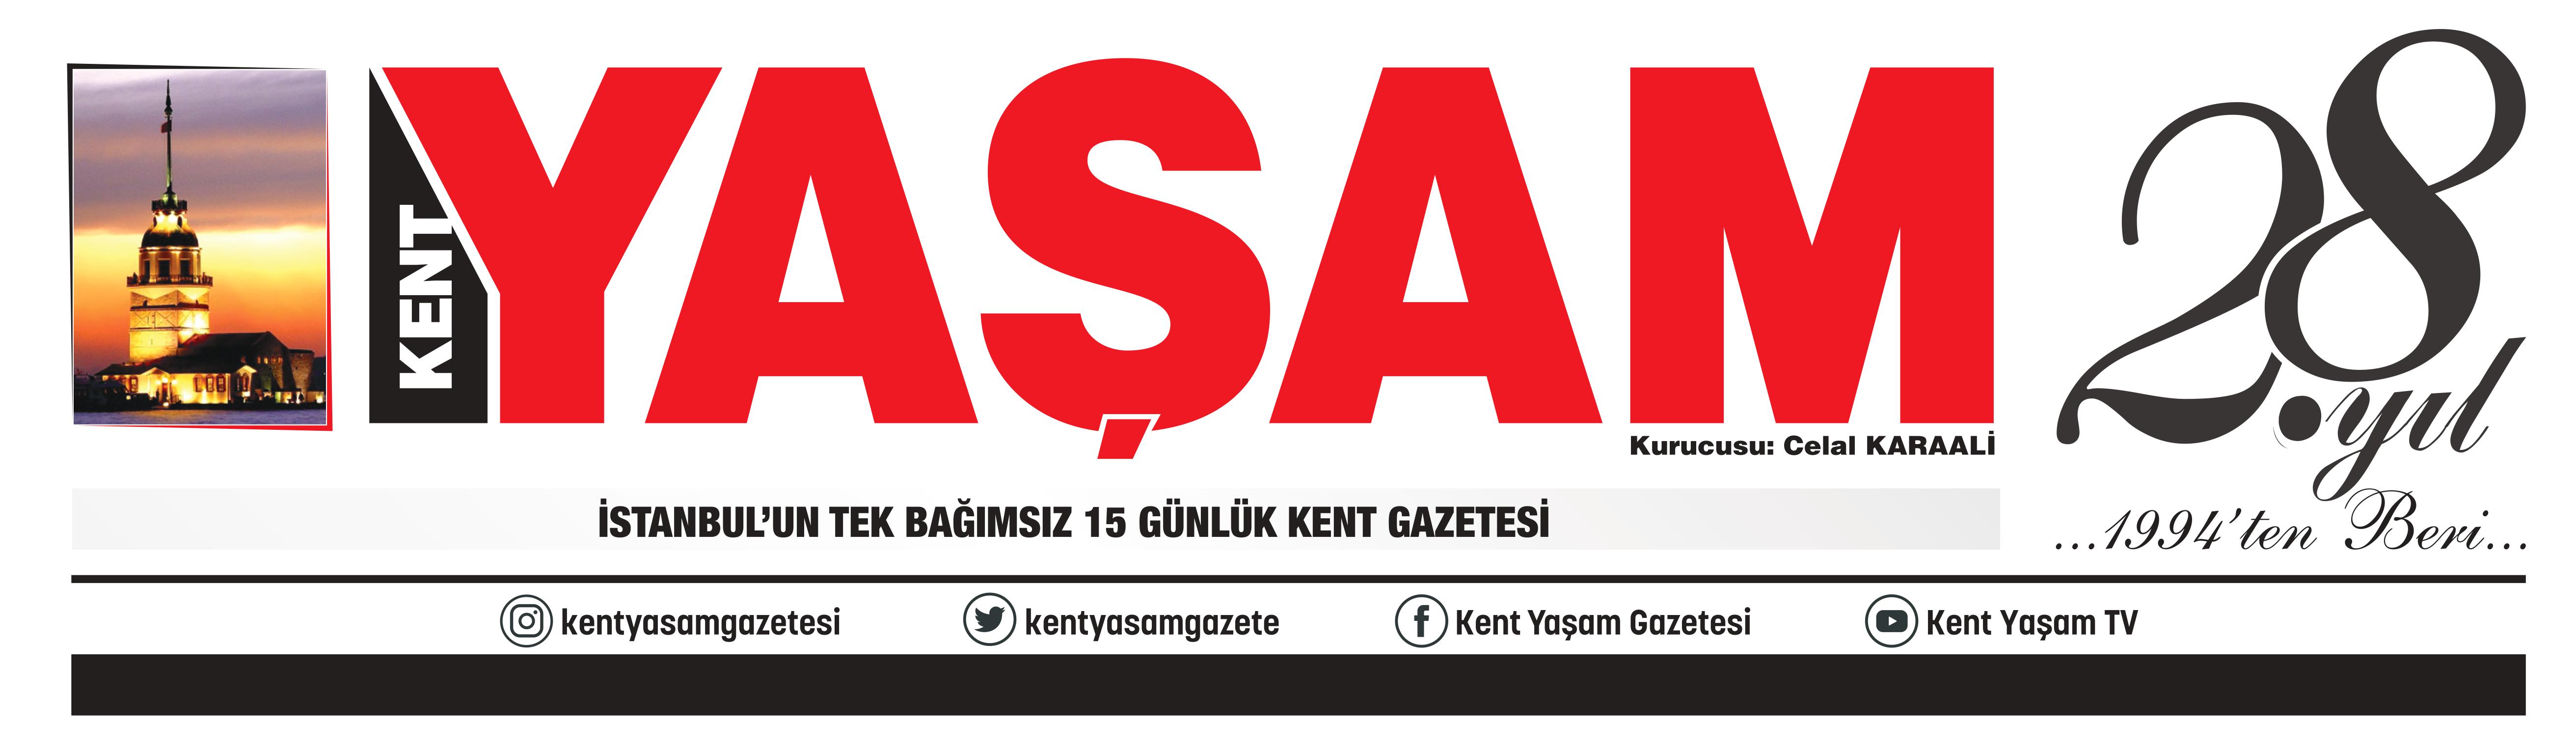 MUSTAFA ÇİFCİ - Yaşam Gazetesi